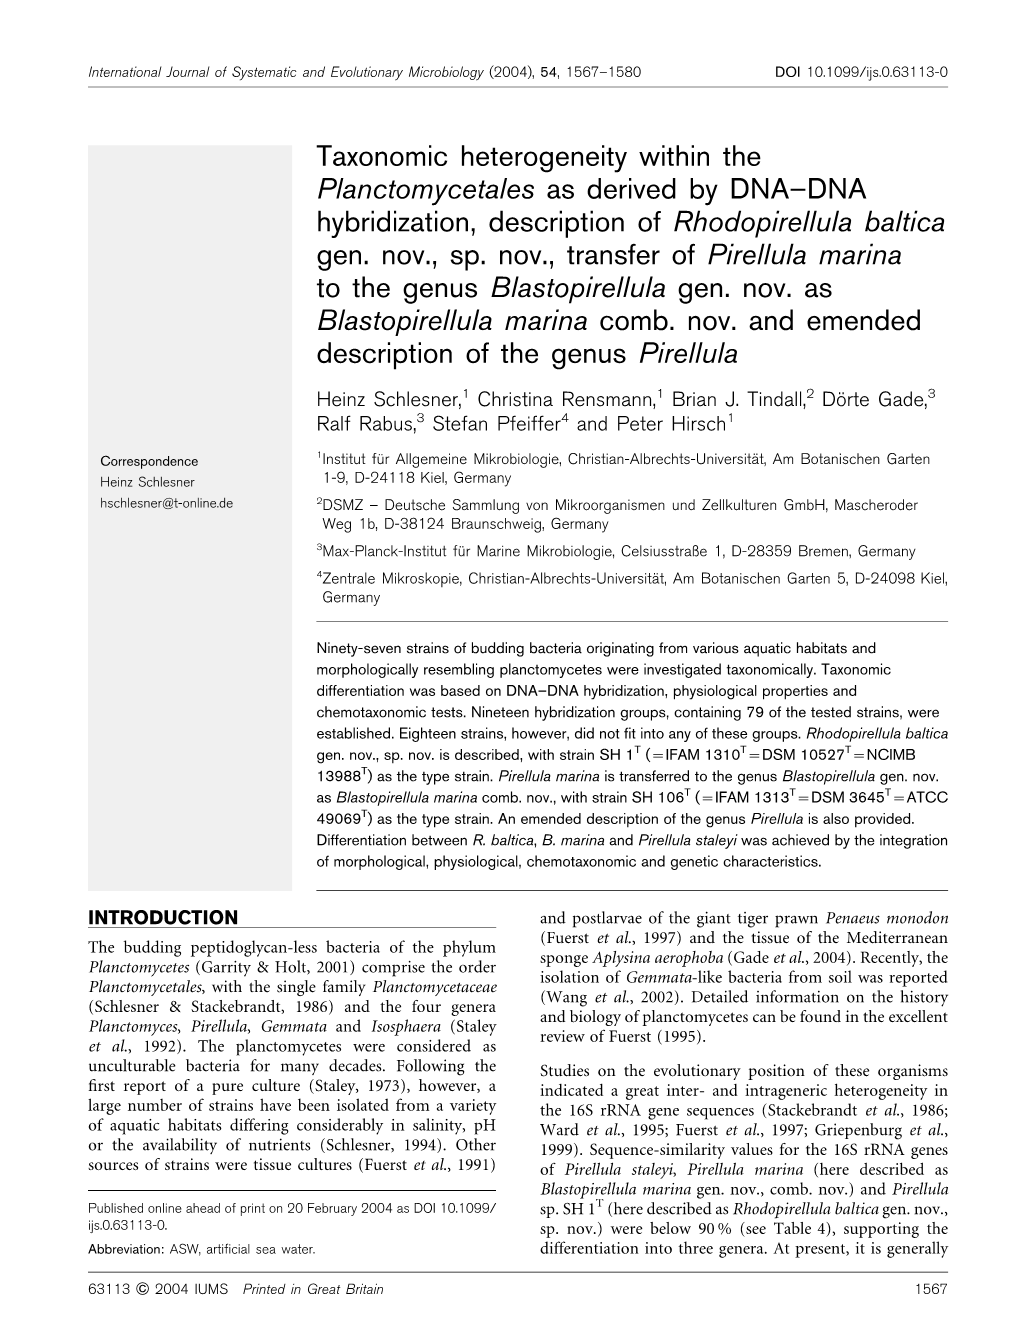 Taxonomic Heterogeneity Within the Planctomycetales As Derived by DNA–DNA Hybridization, Description of Rhodopirellula Baltica Gen